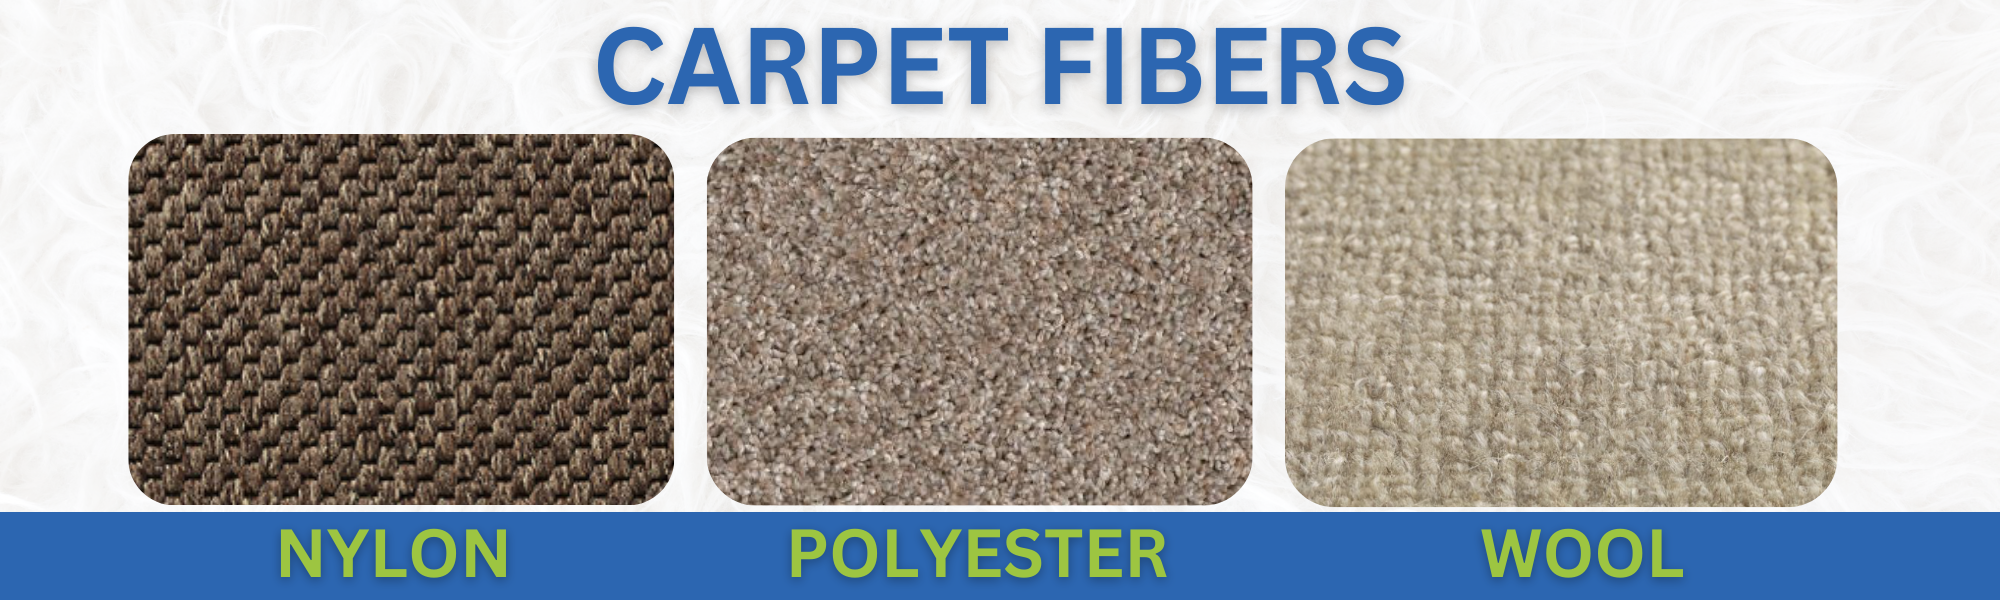 carpet-fibers